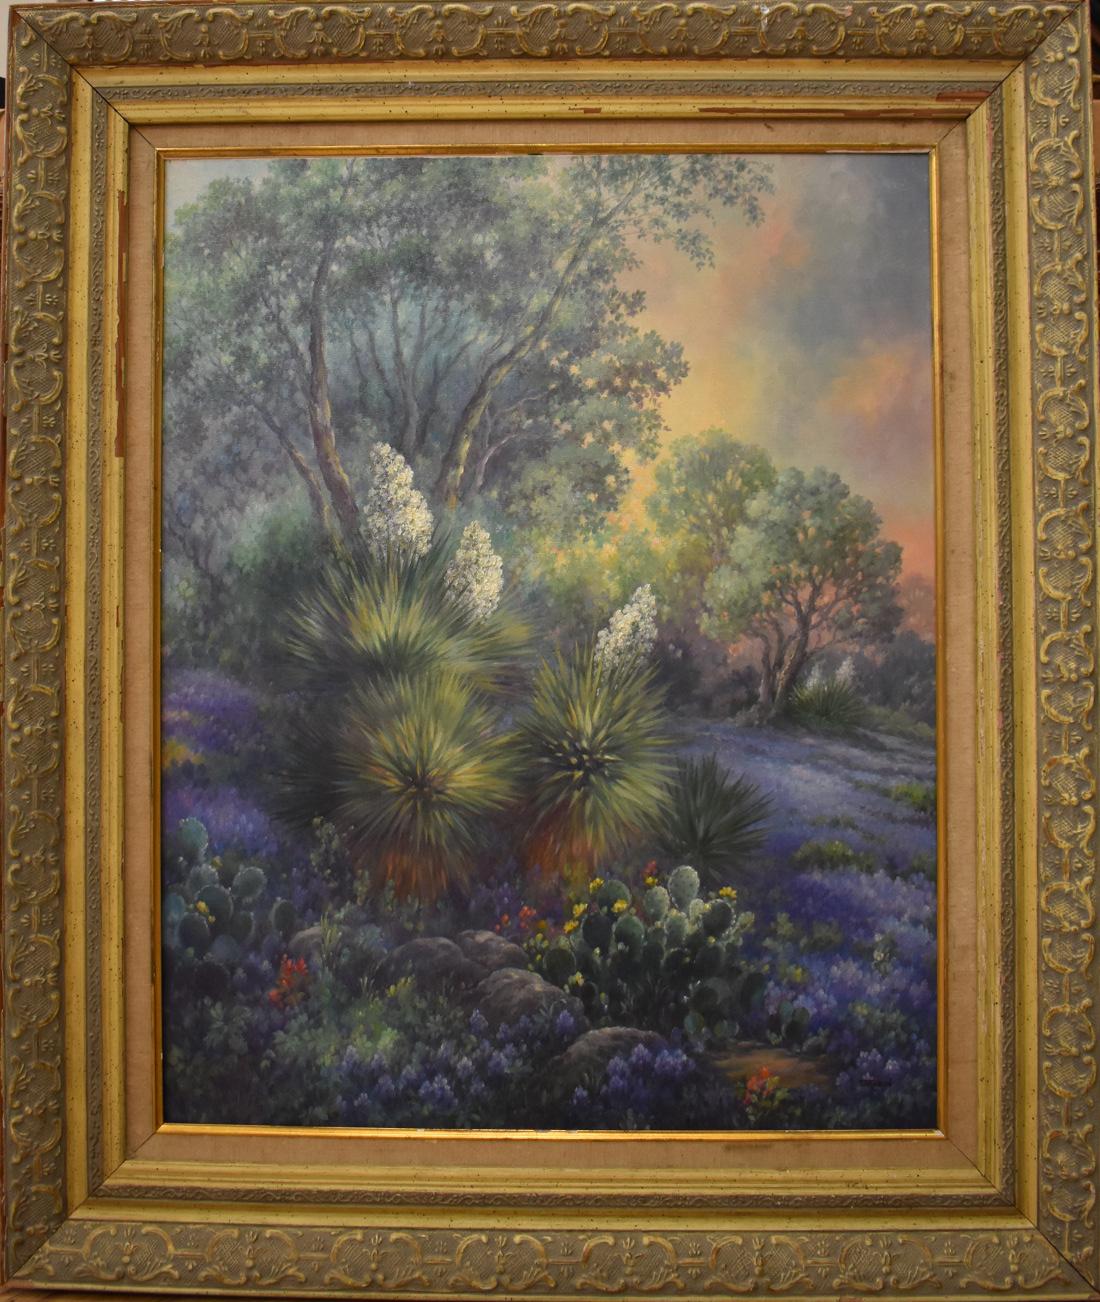 Maureen Tarazon  Bluebonnet
(1934-)
San Antonio Artist
Image Size: 30 x 24
Frame Size: 39 x 33
Medium: Oil
